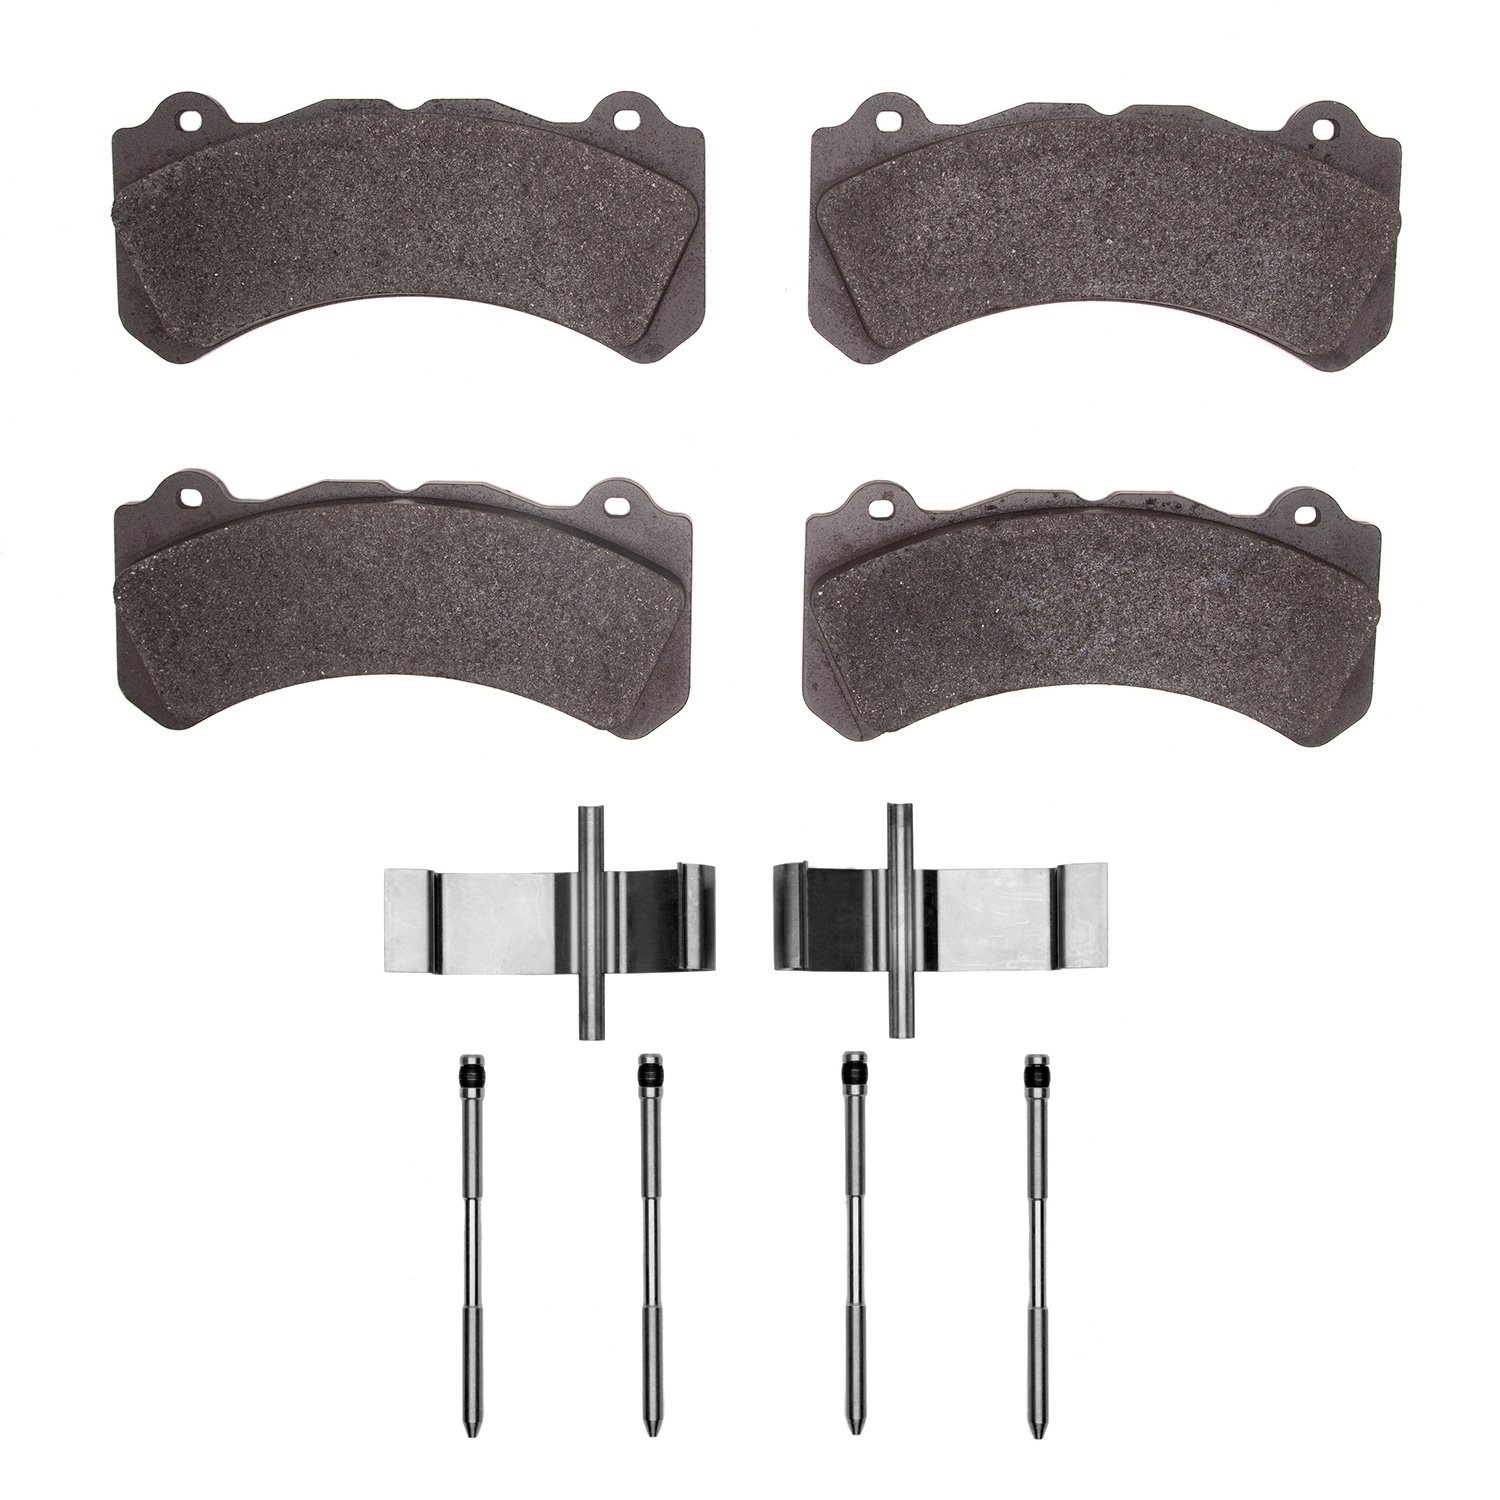 1310-2143-01 3000-Series Ceramic Brake Pads & Hardware Kit, Fits Select Volvo, Position: Front